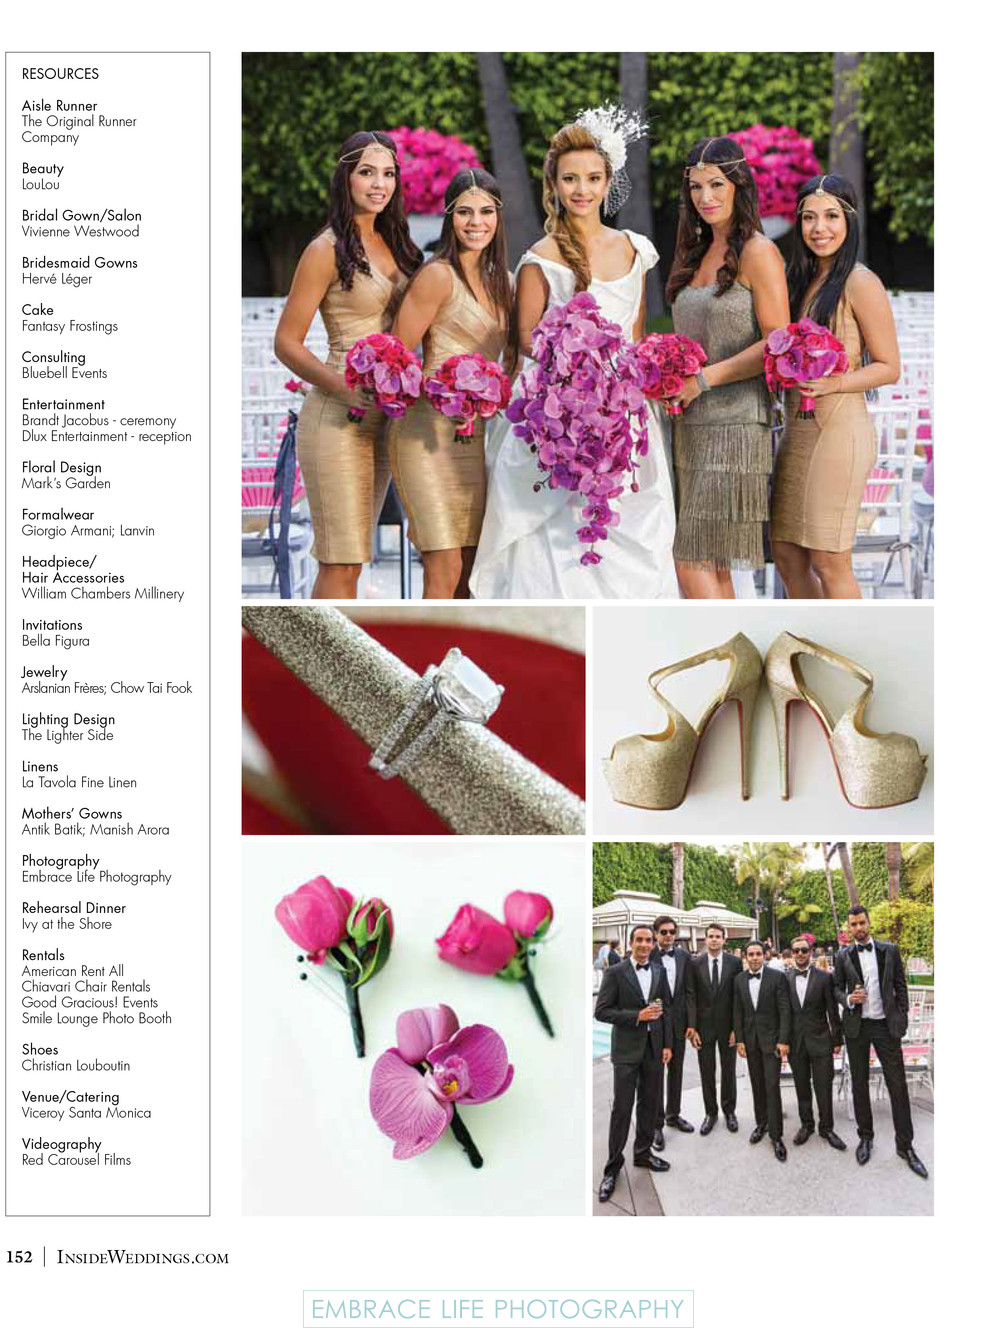 Viceroy Santa Monica Wedding Party and Detail Photos